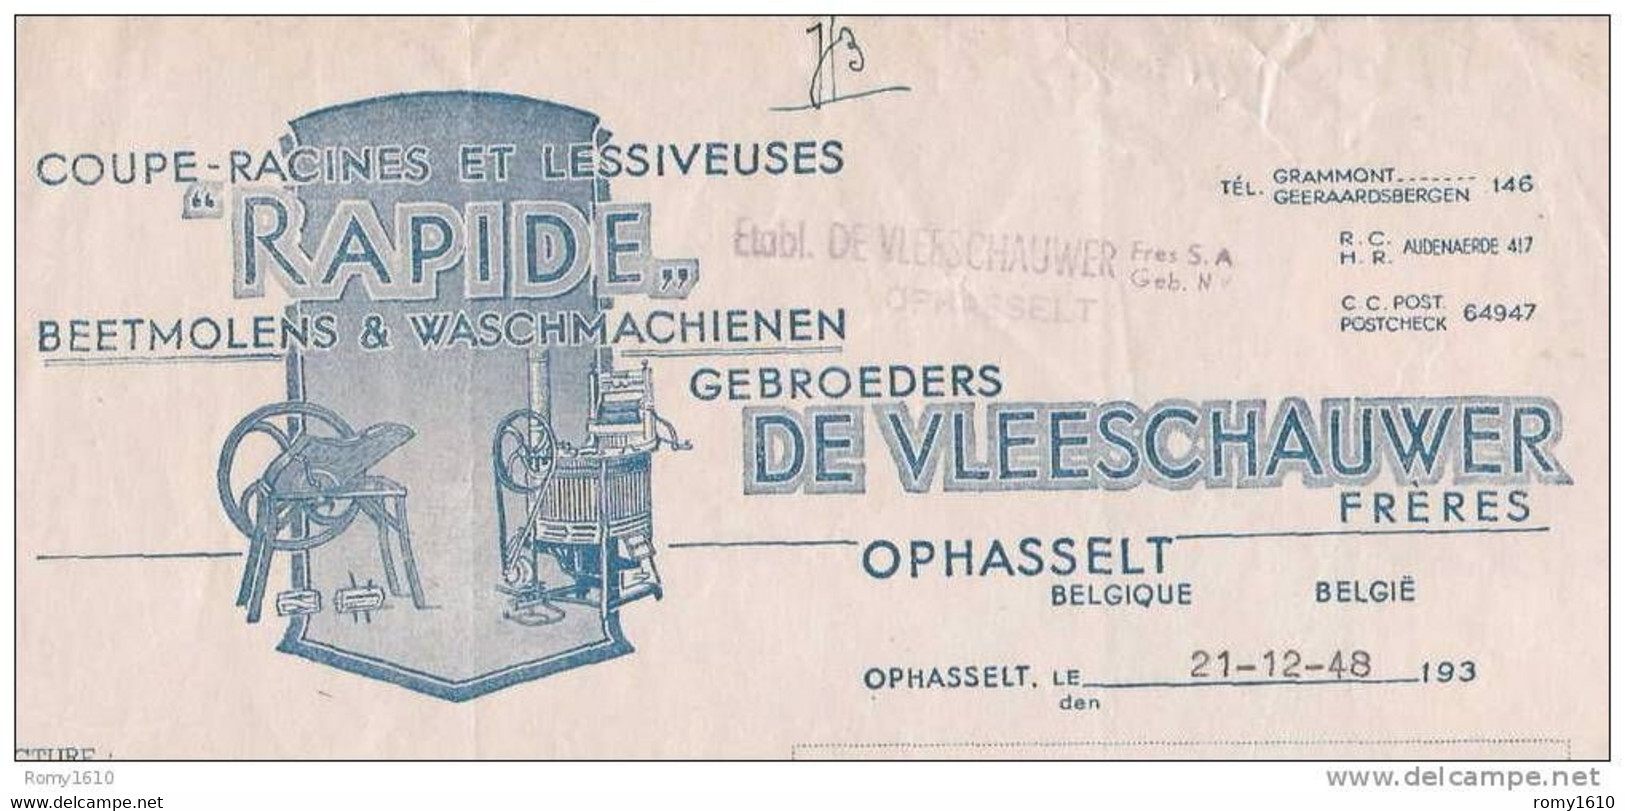 OPHASSELT - Superbe Facture Des Etablissements De Vleeschauwer - Coupe-Racines, Lessiveuses (1948) - Landwirtschaft